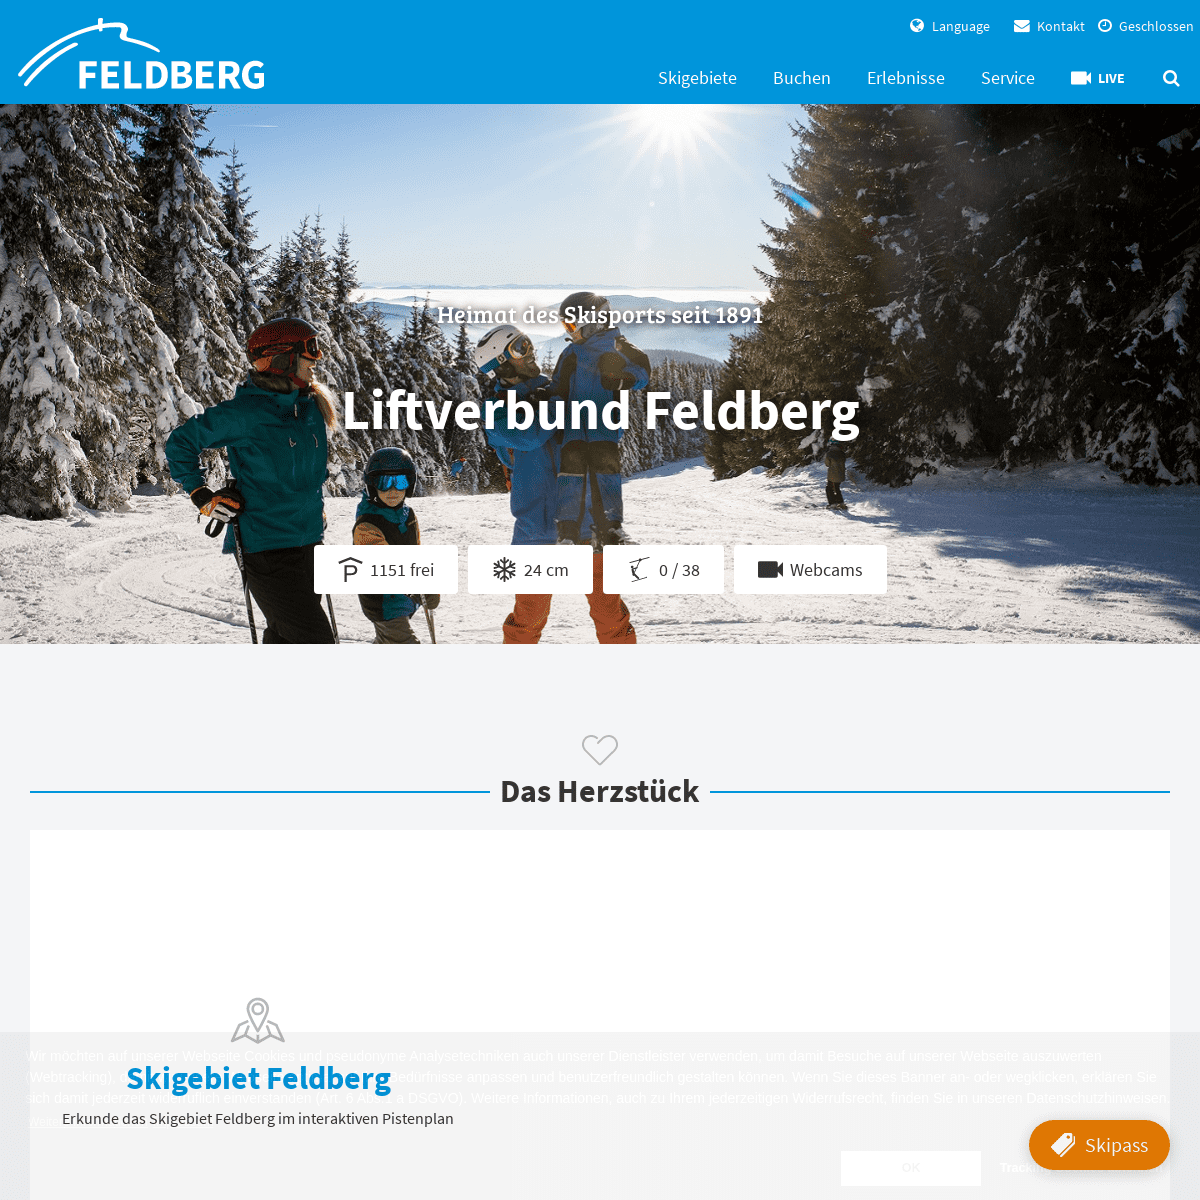 A complete backup of liftverbund-feldberg.de